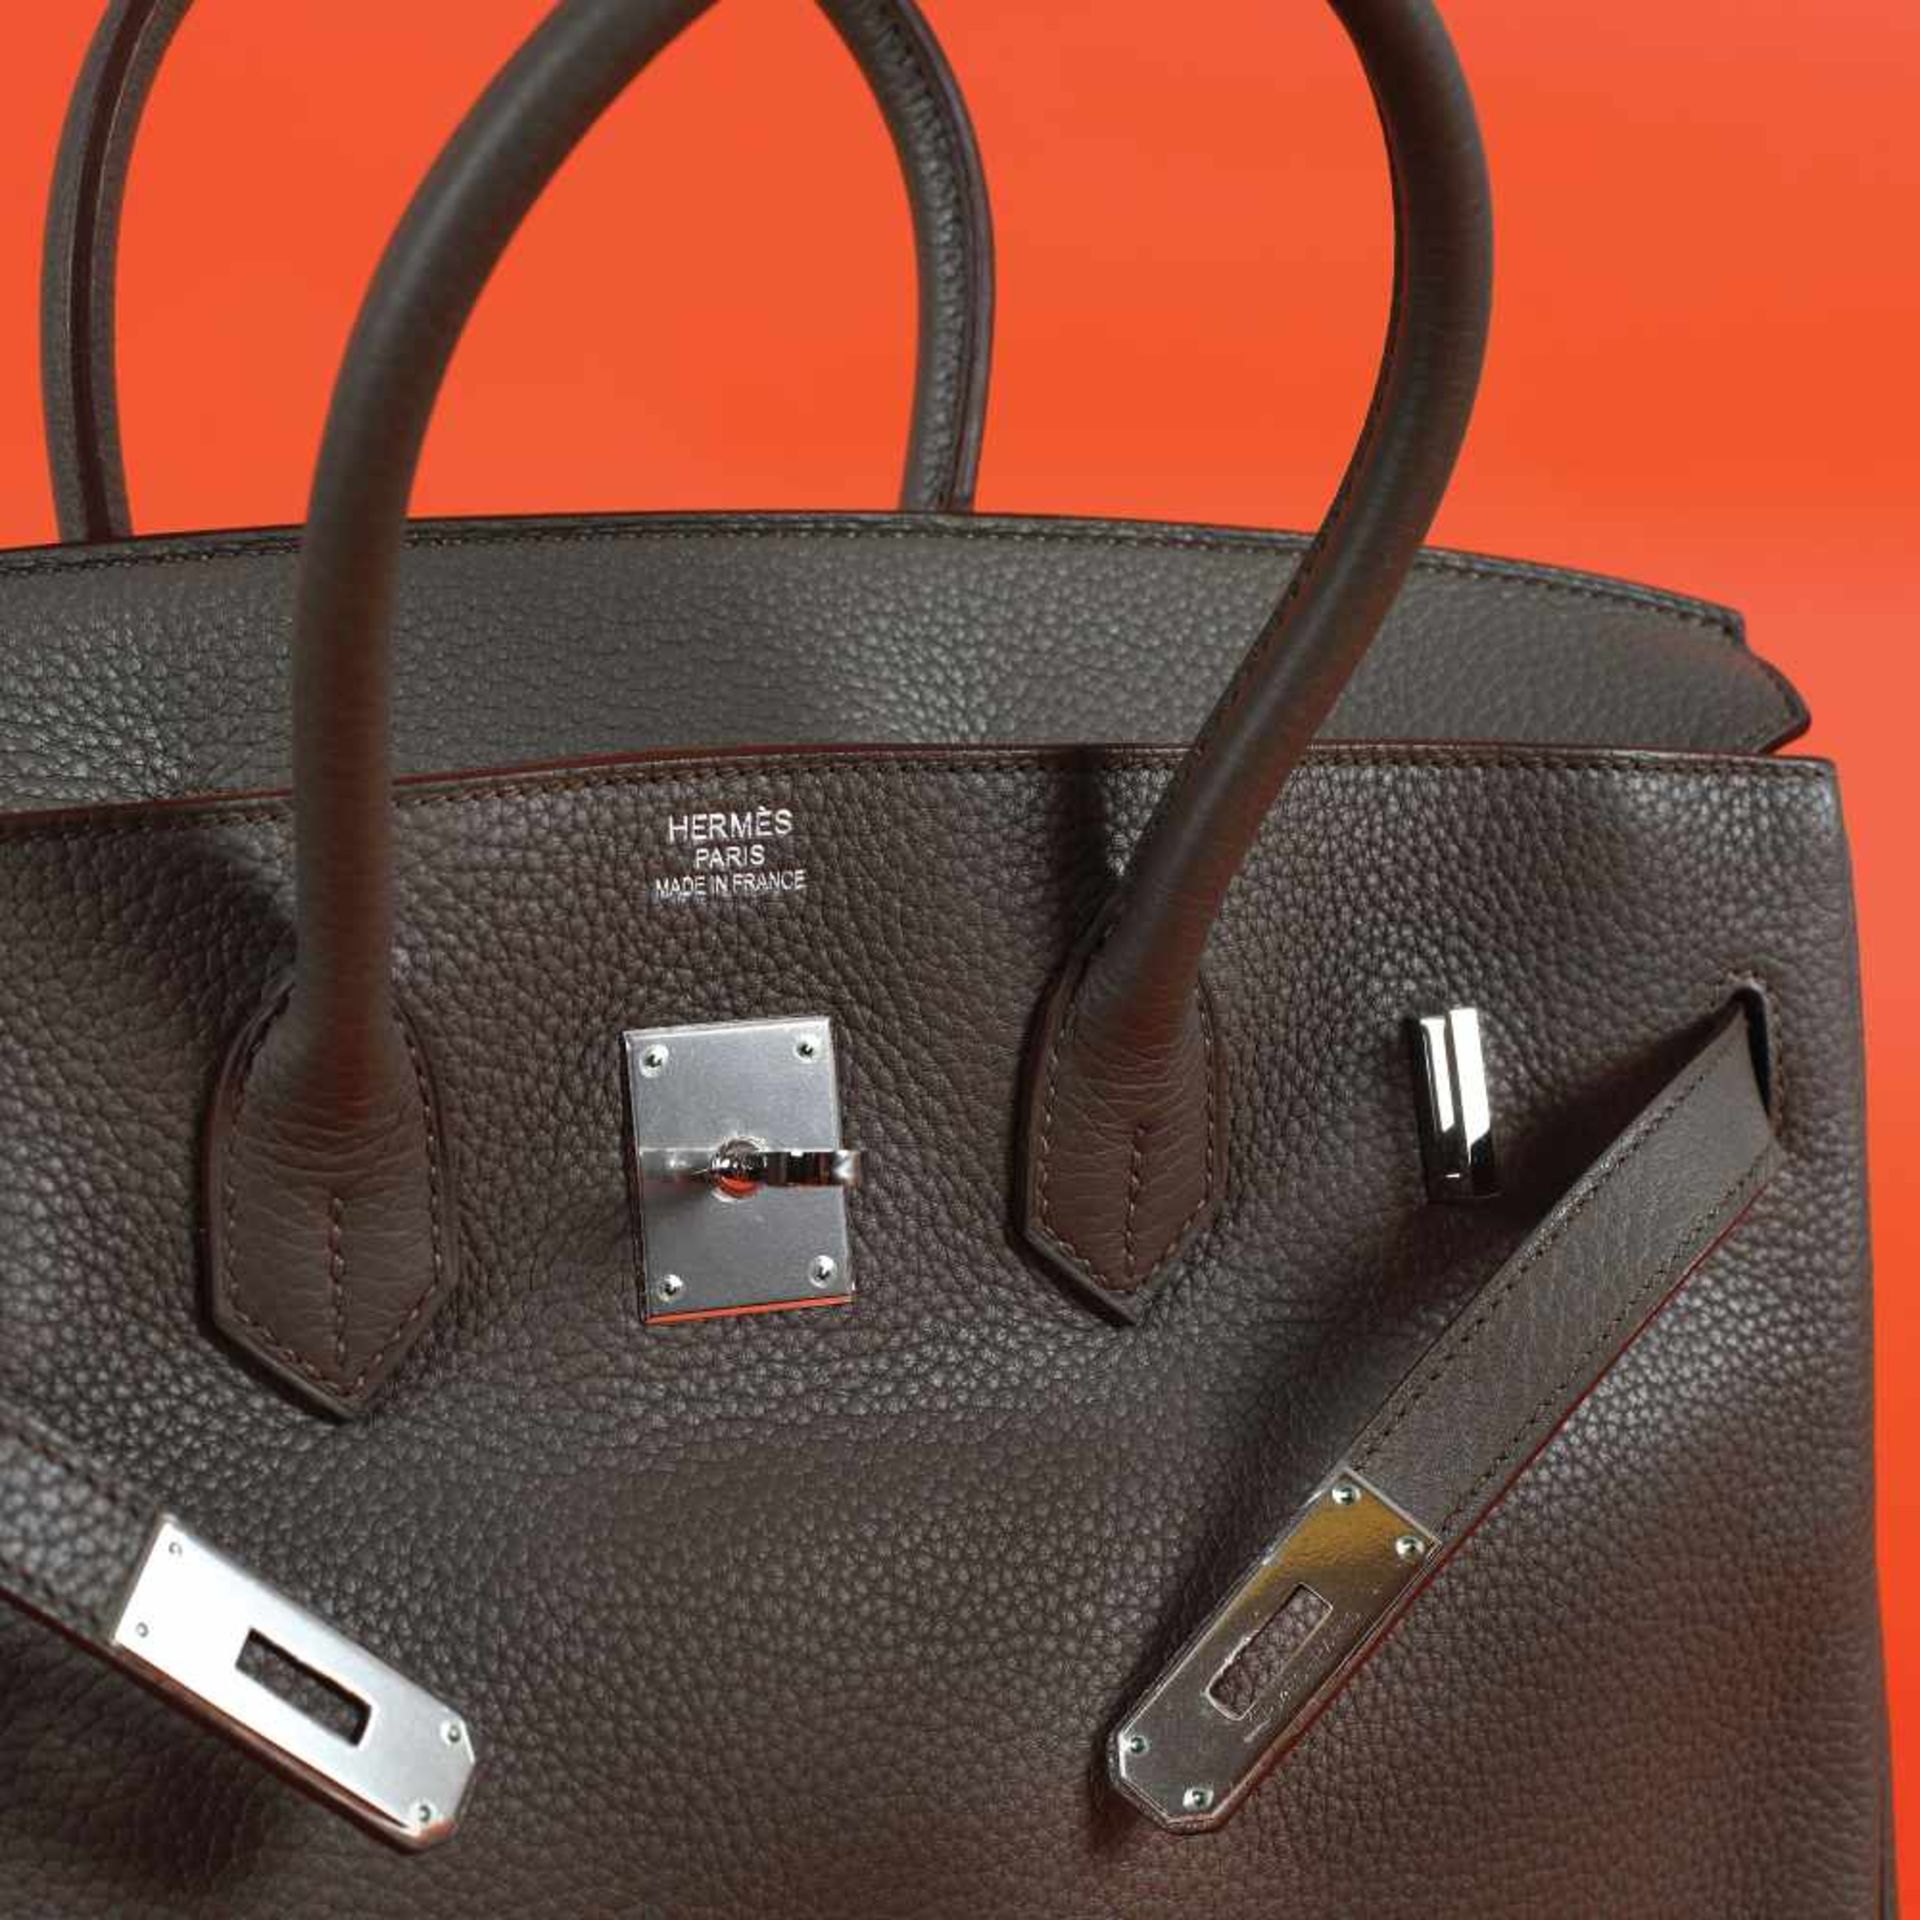 "Birkin 35" - Hermès bag, Clemence leather, colour Etain, for women, accompanied by original box - Image 6 of 8